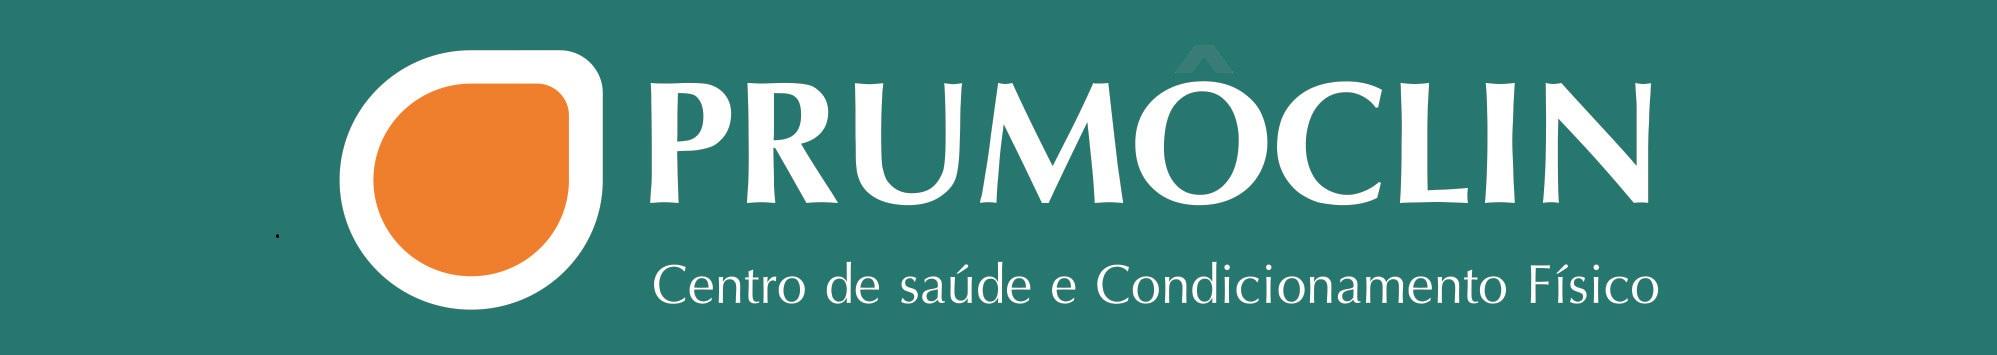 Prumofisio logo